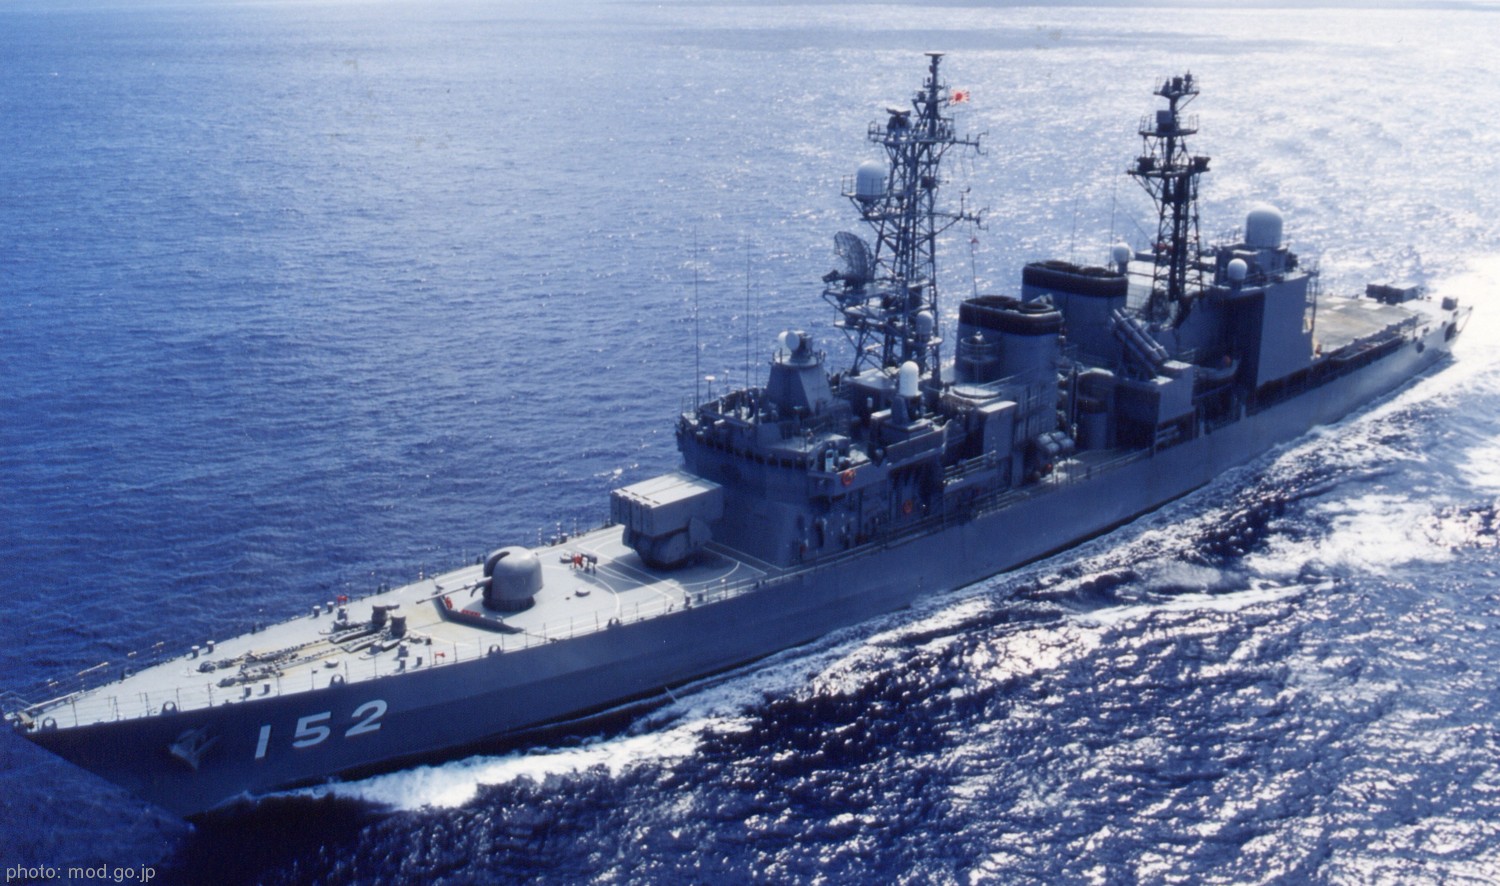 dd-152 jds yamagiri asagiri class destroyer japan maritime self defense force jmsdf 11